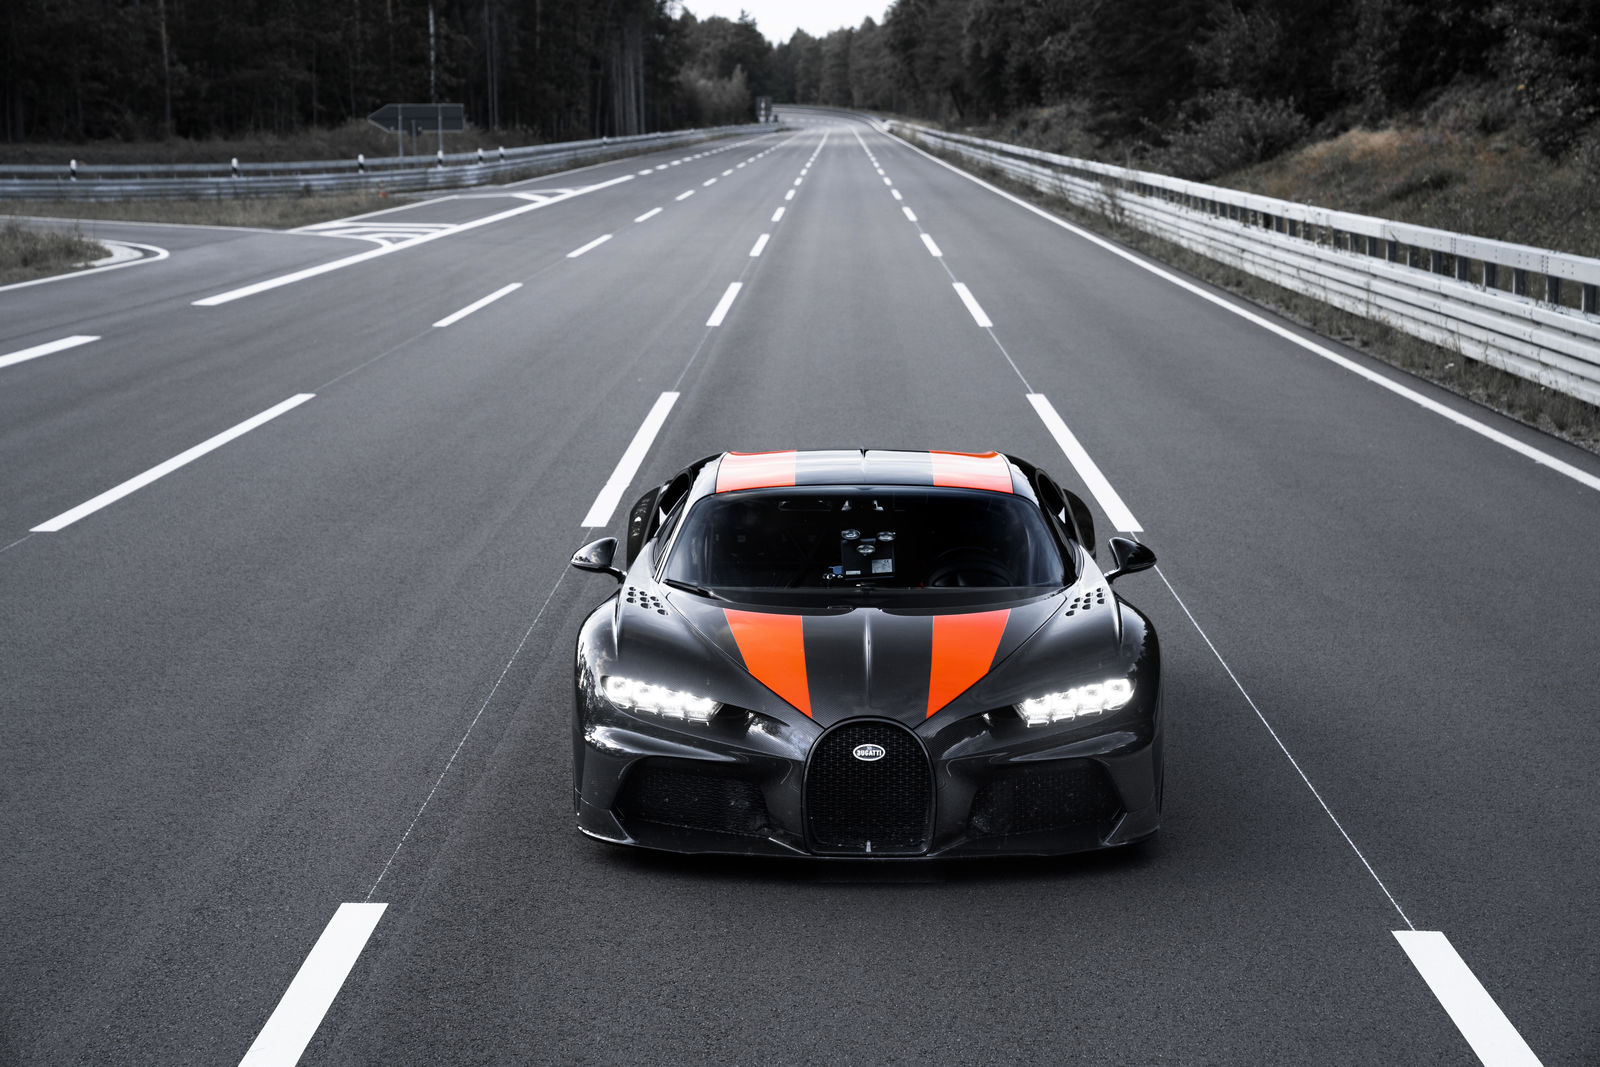 Bugatti Chiron 300 mph_2019 (1)